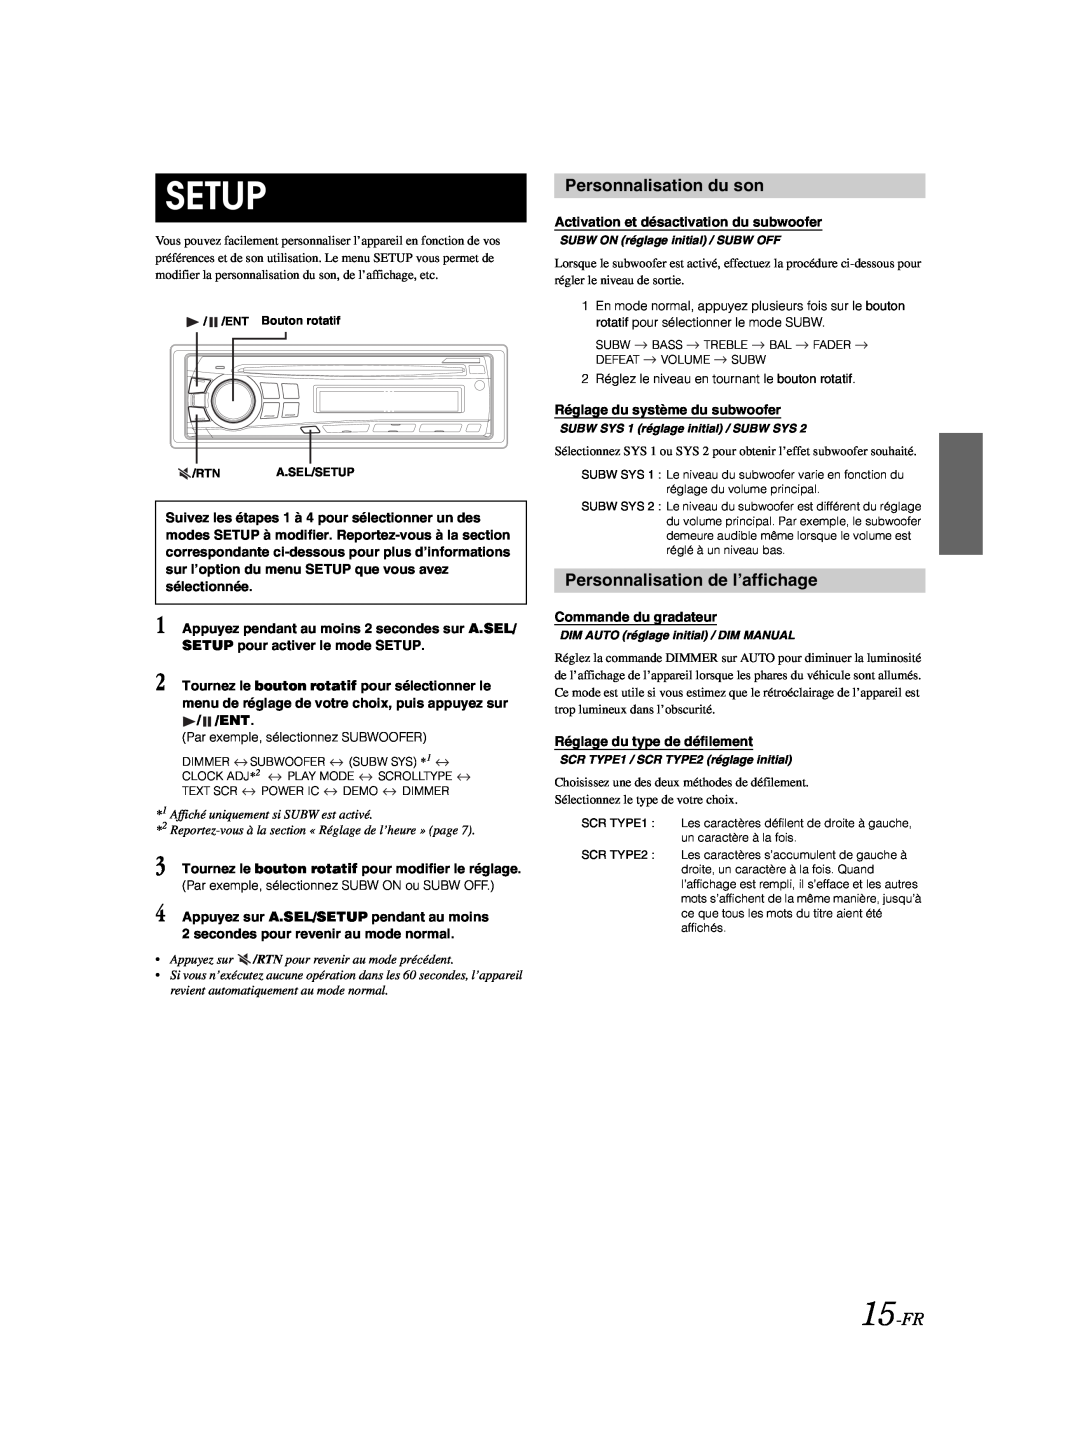 Alpine CDE-9873 owner manual Personnalisation du son, Personnalisation de l’affichage, 15-FR, Setup 